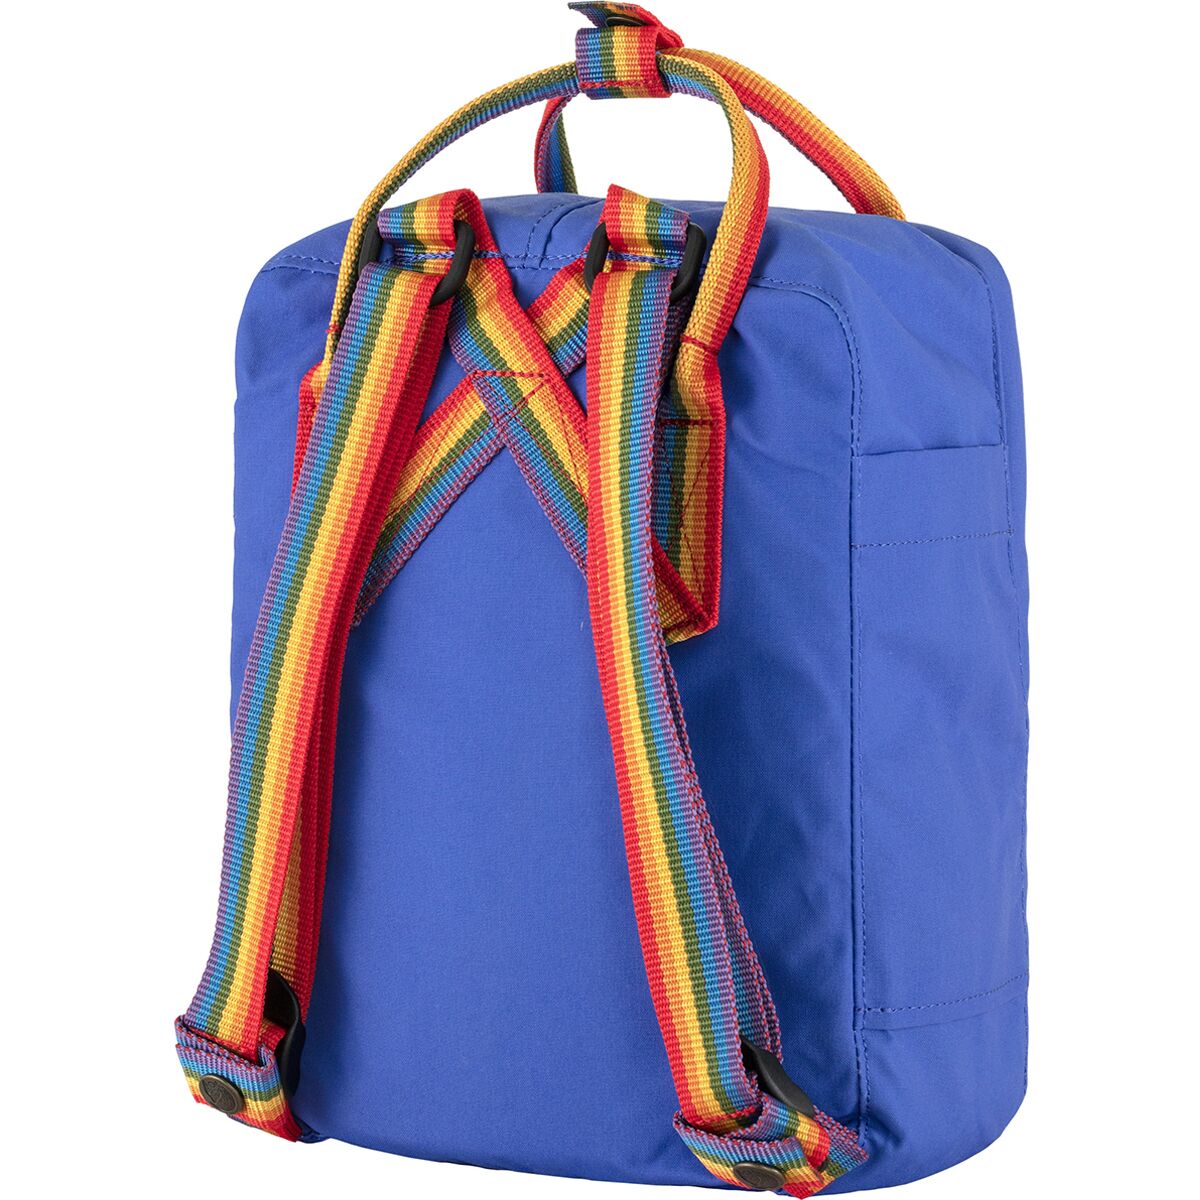 Kanken Mini Backpack Cobalt Blue